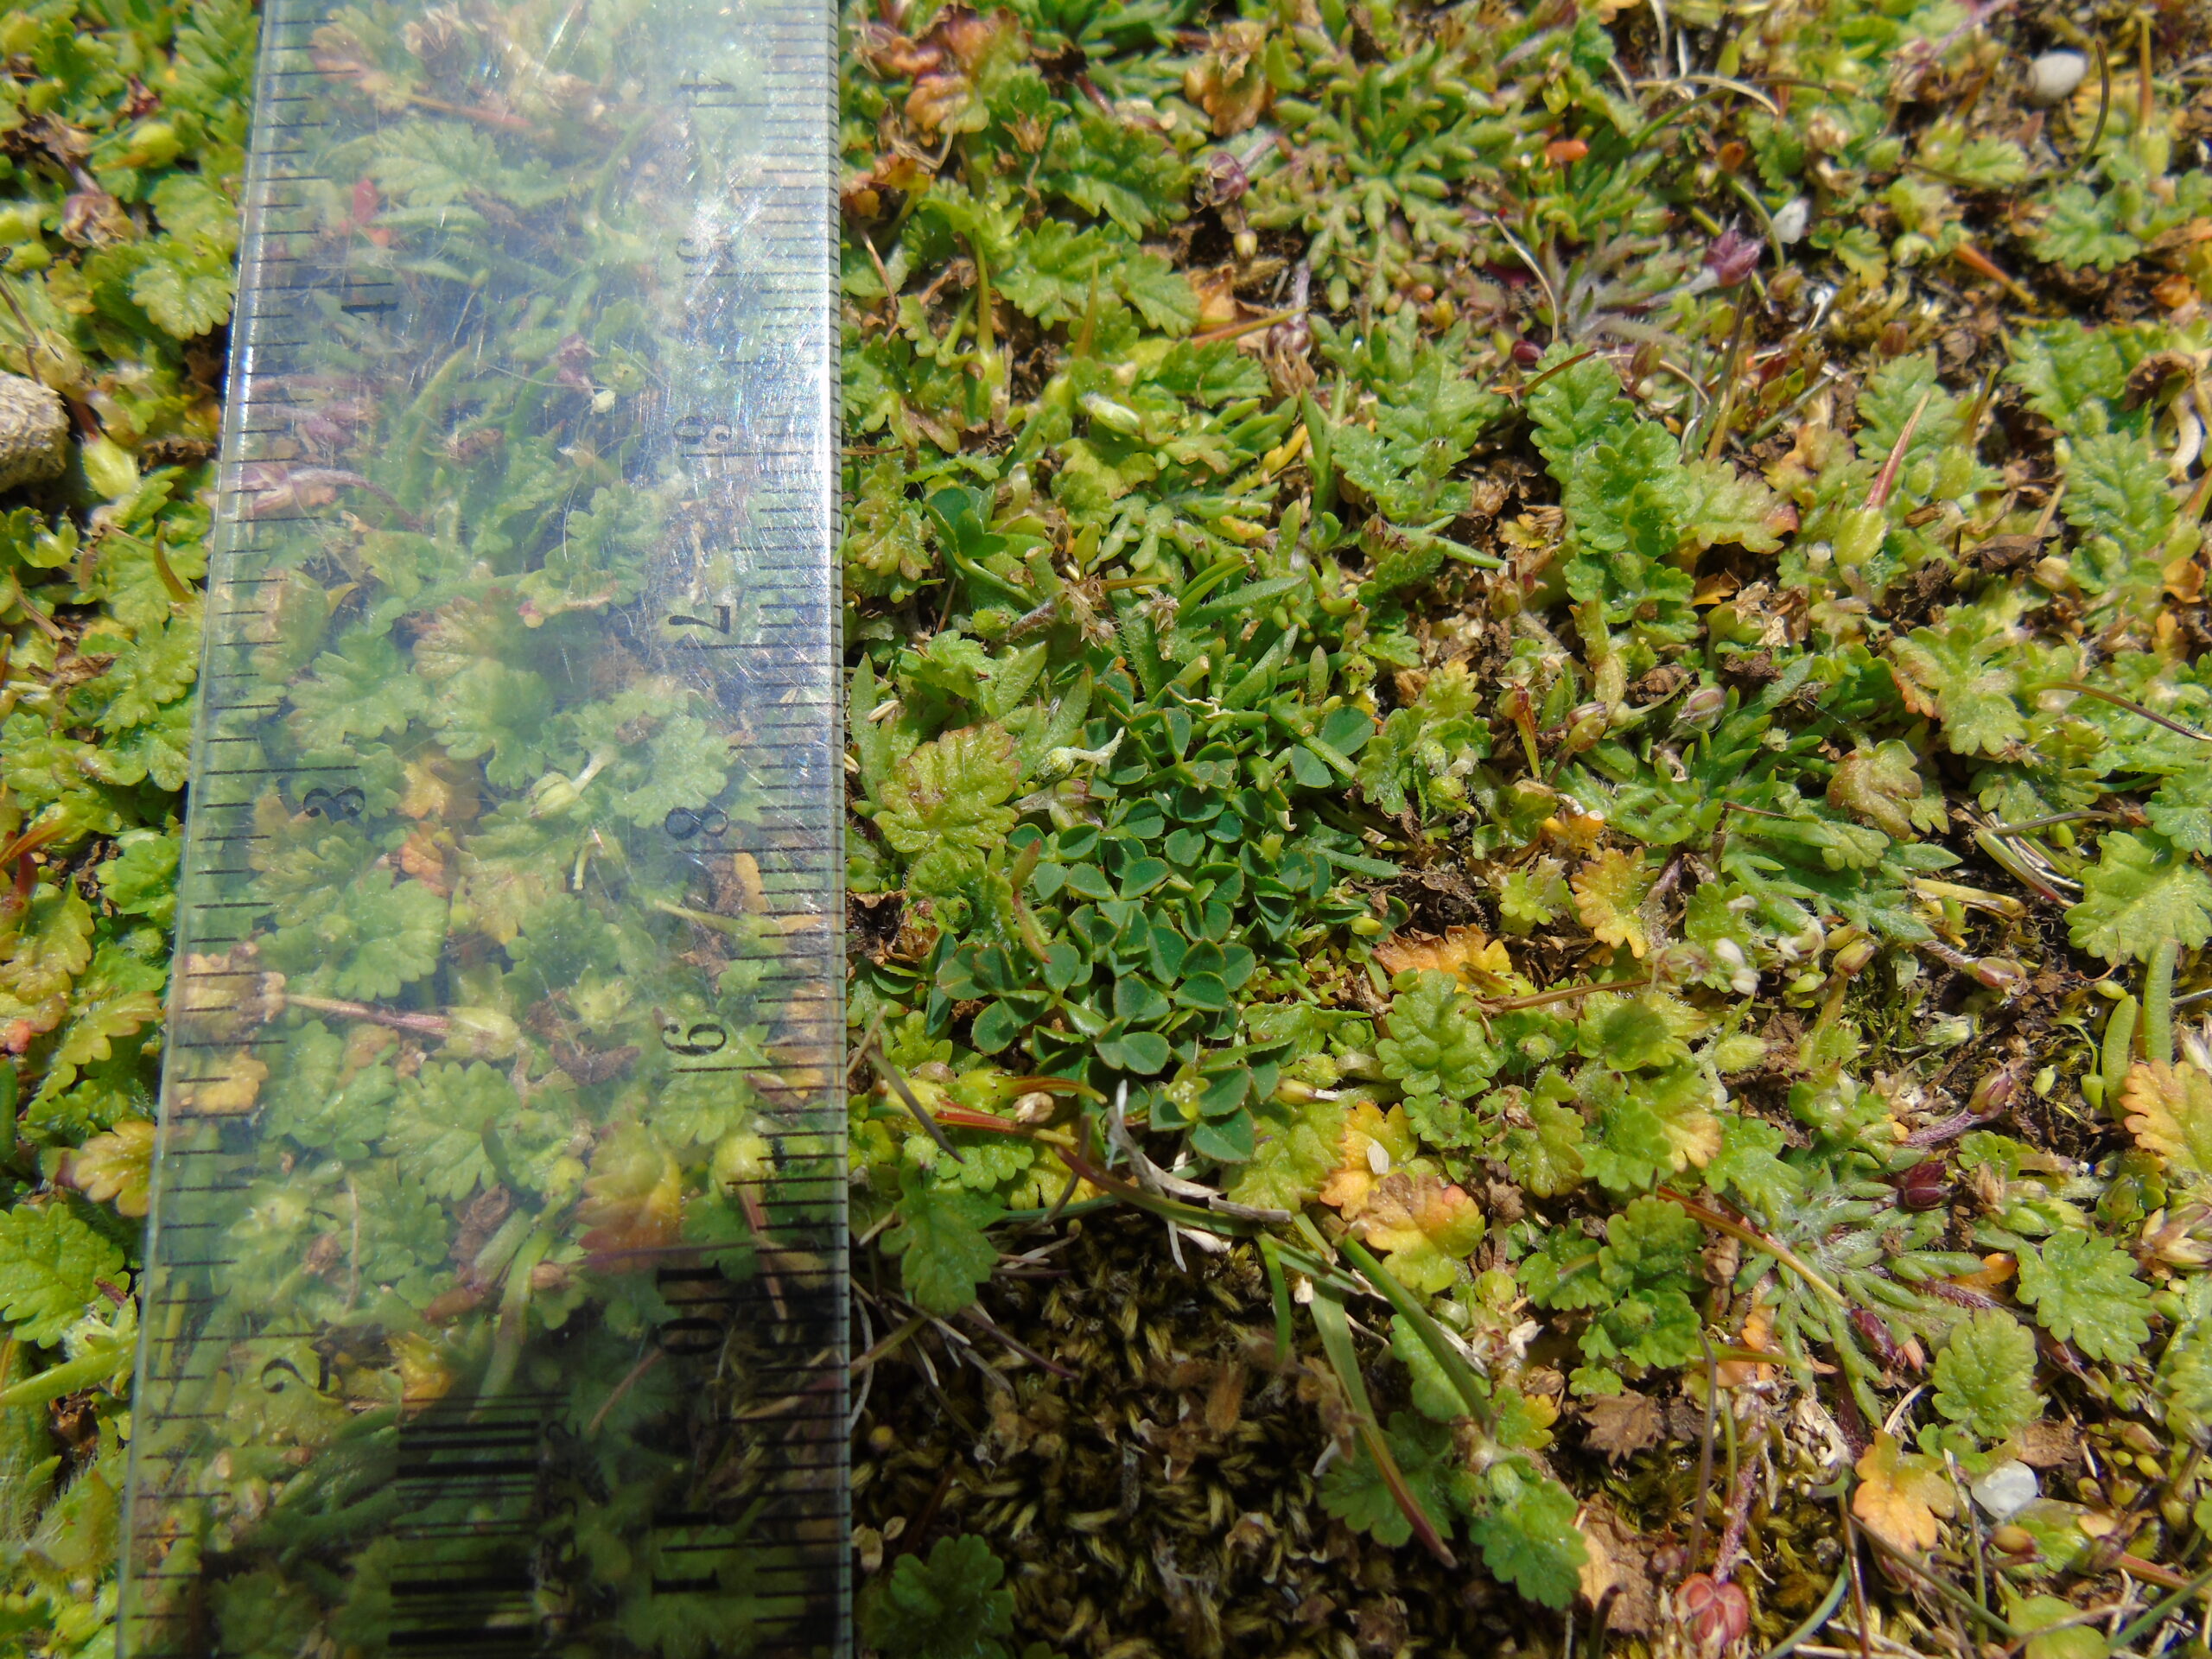 Dalkey Island rare plant survey - the miniscule Trifolium occidentale